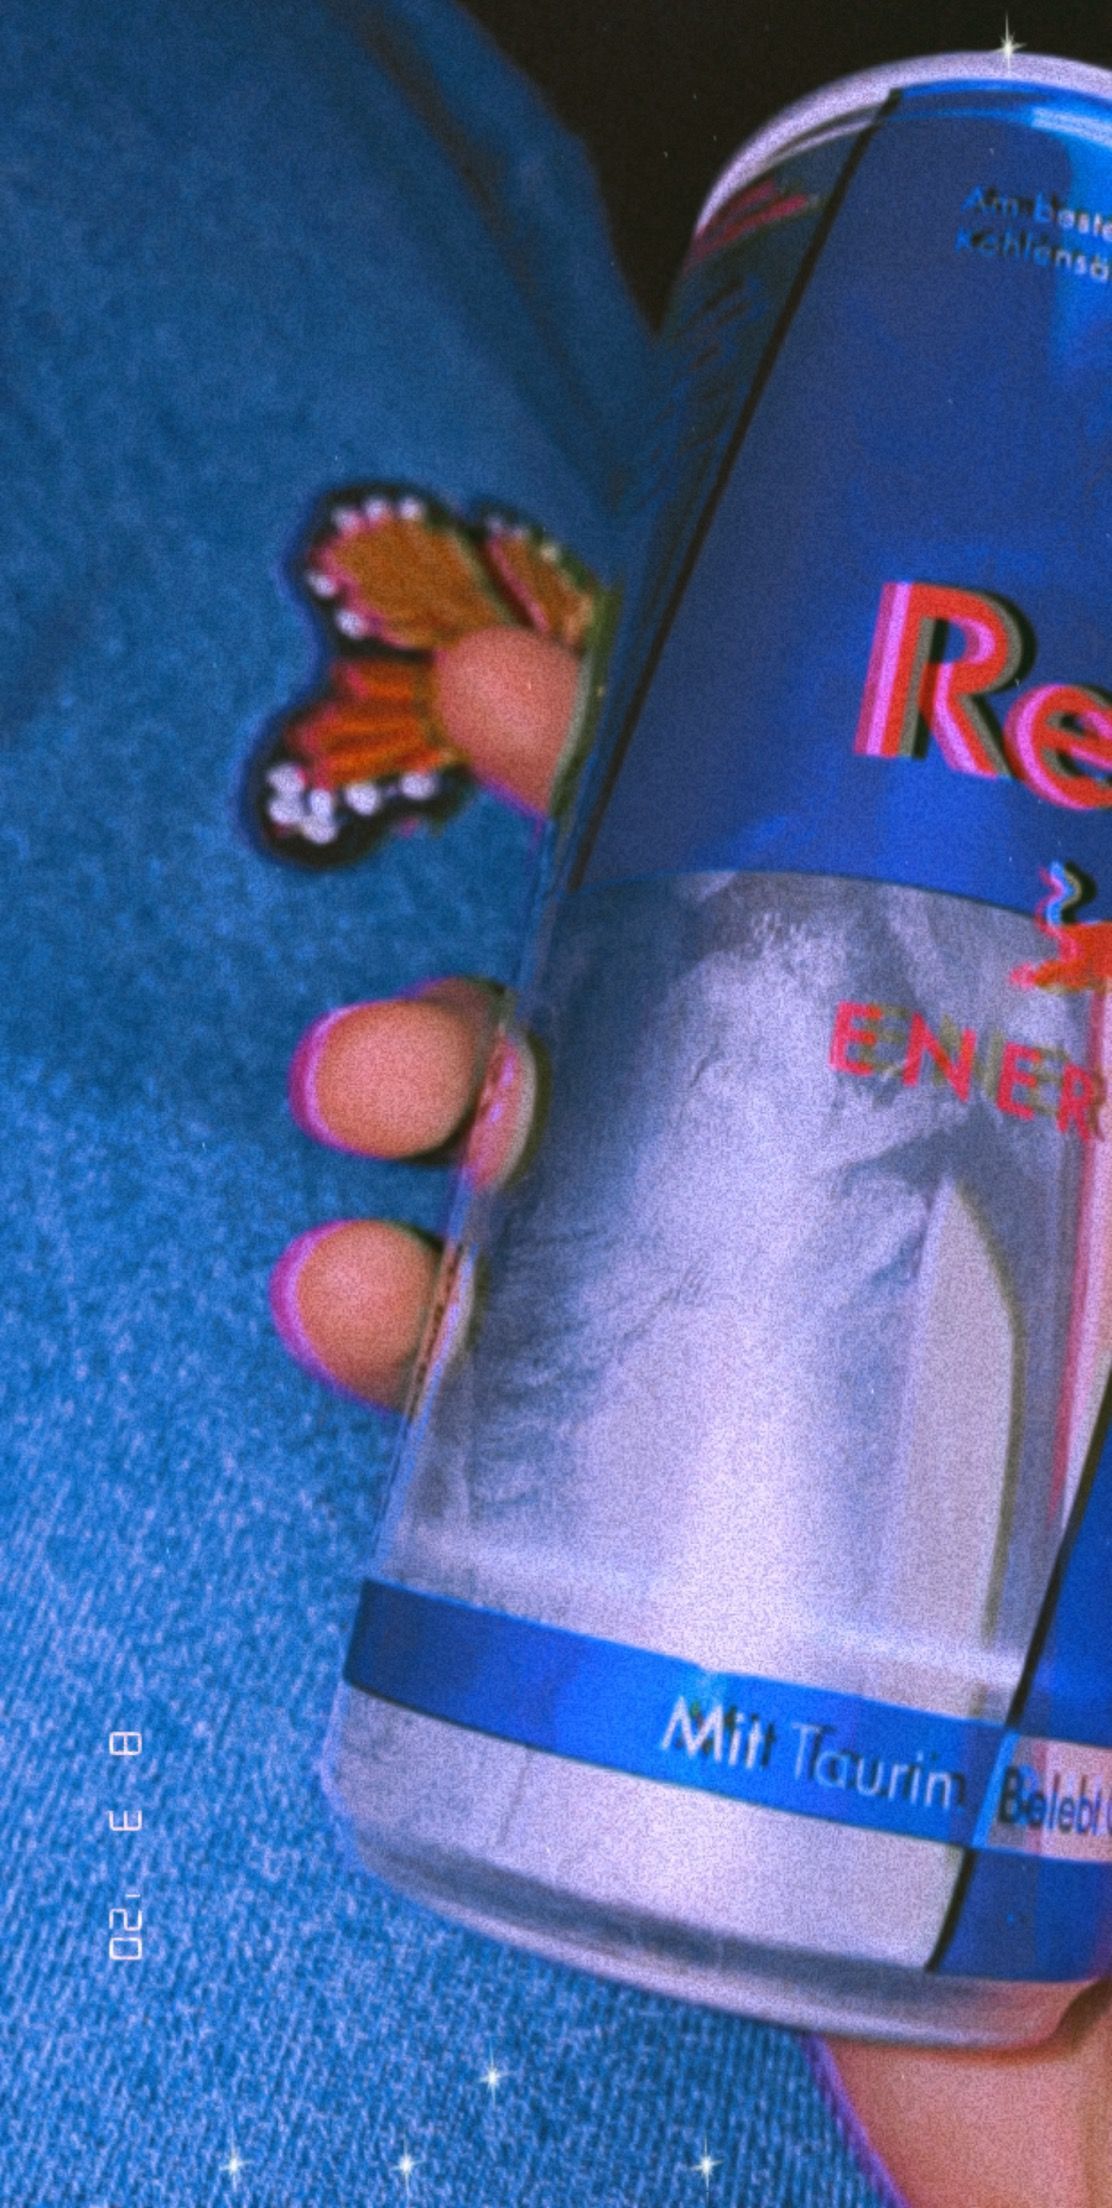  Red Bull Hintergrundbild 1112x2208. Pin auf energy drink aesthetics